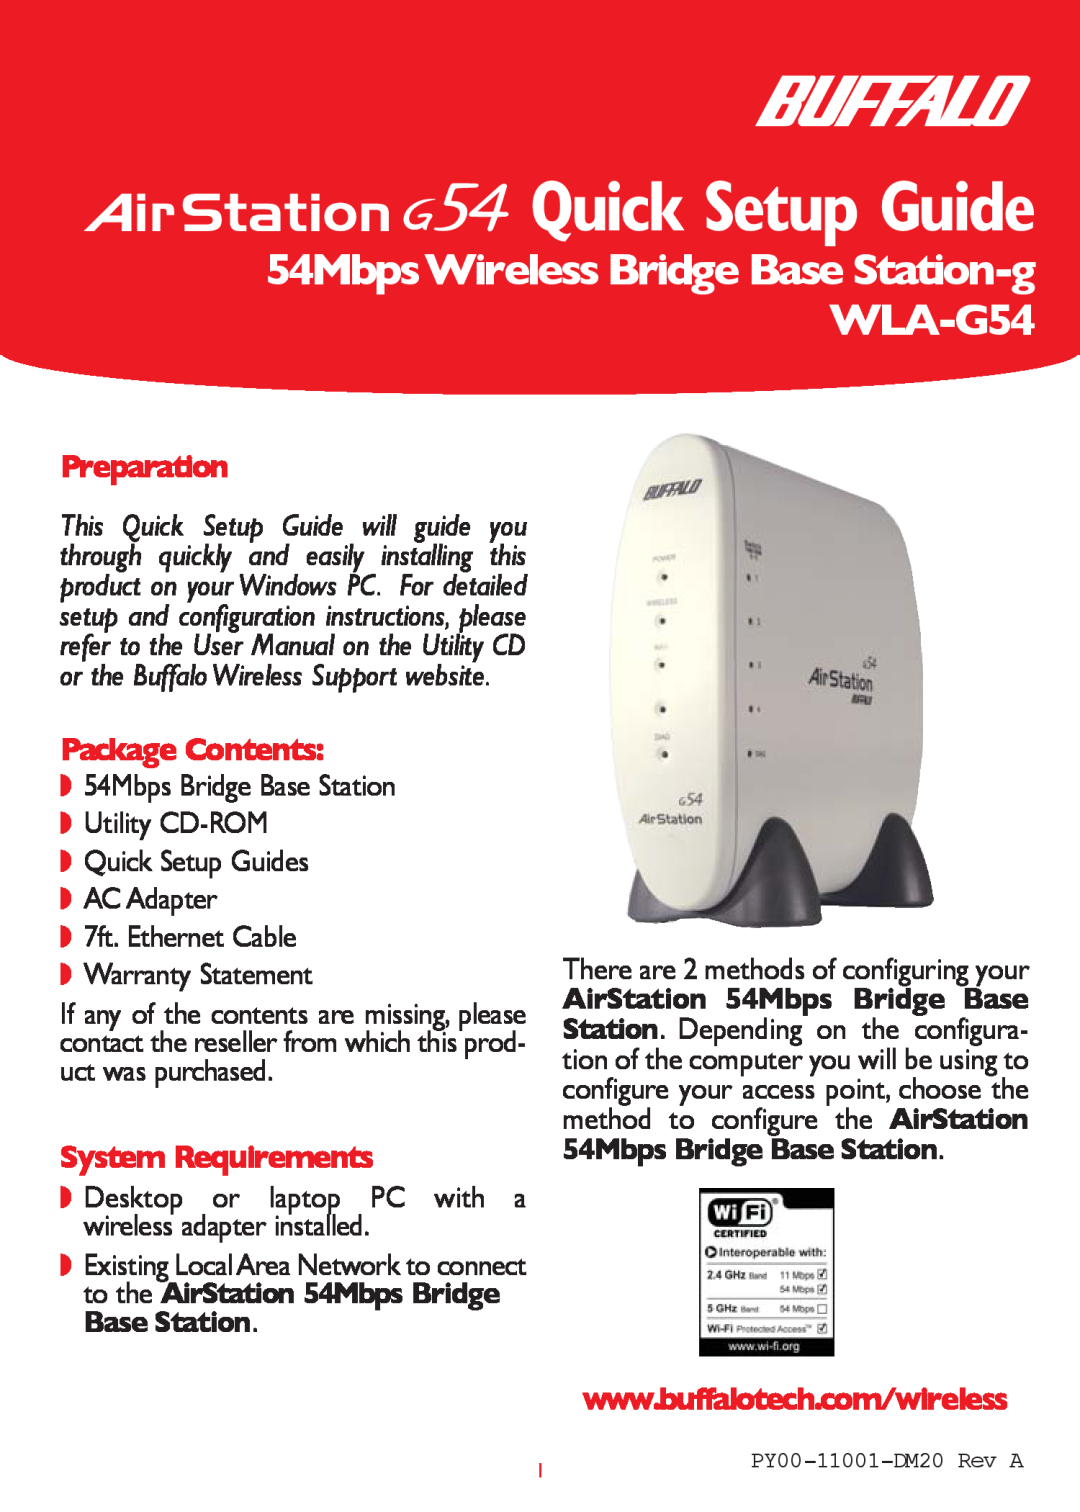 Buffalo Technology setup guide 54Mbps Wireless Bridge Base Station-g WLA-G54, Preparation, Package Contents 